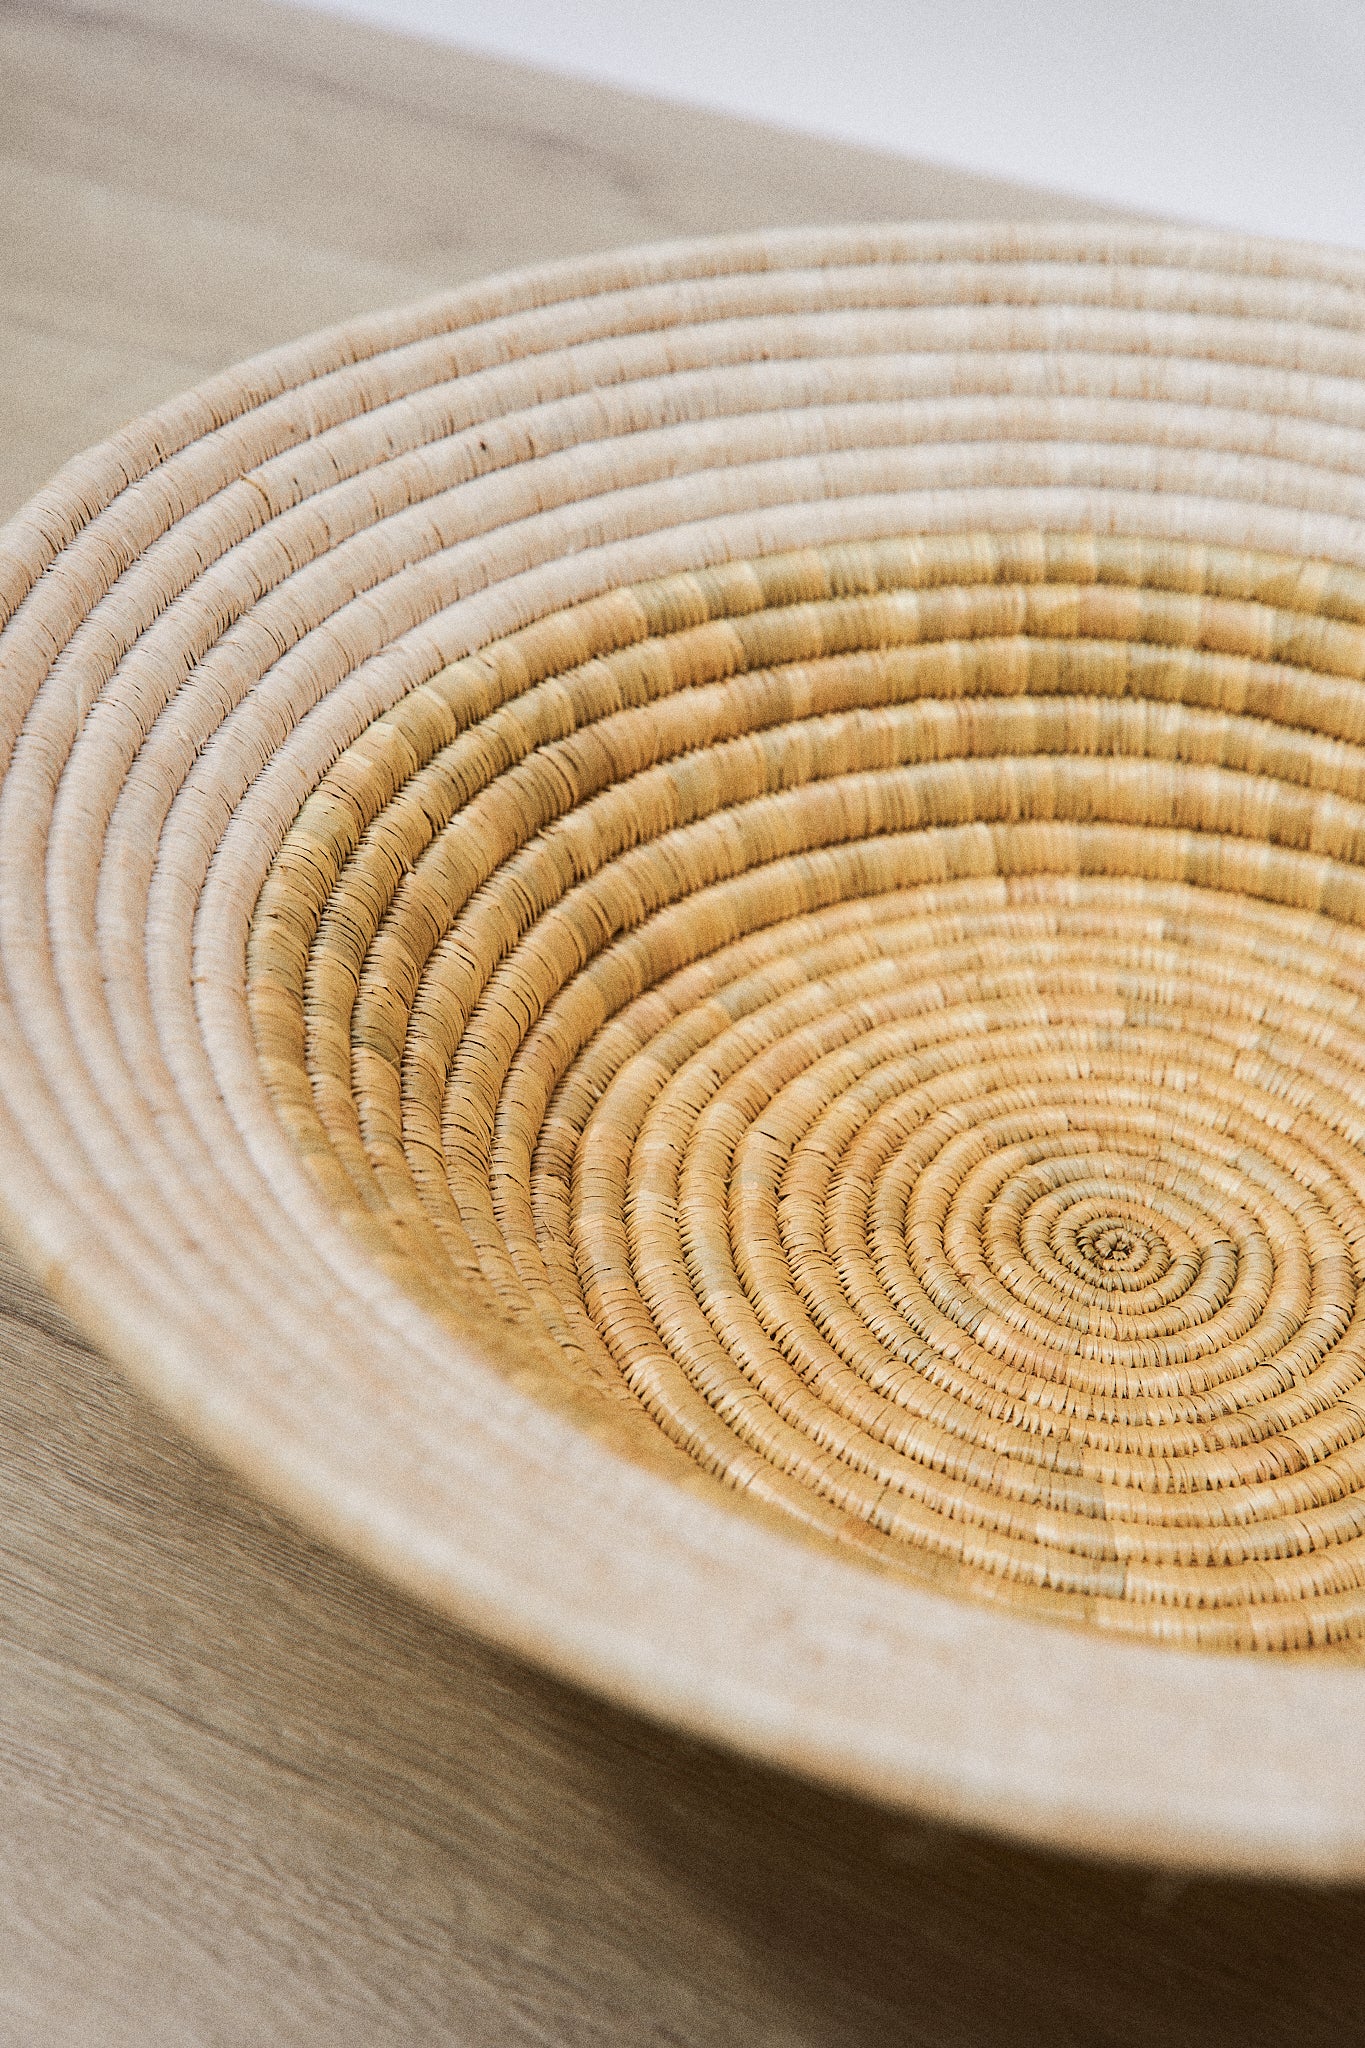 Tabletop Woven Basket